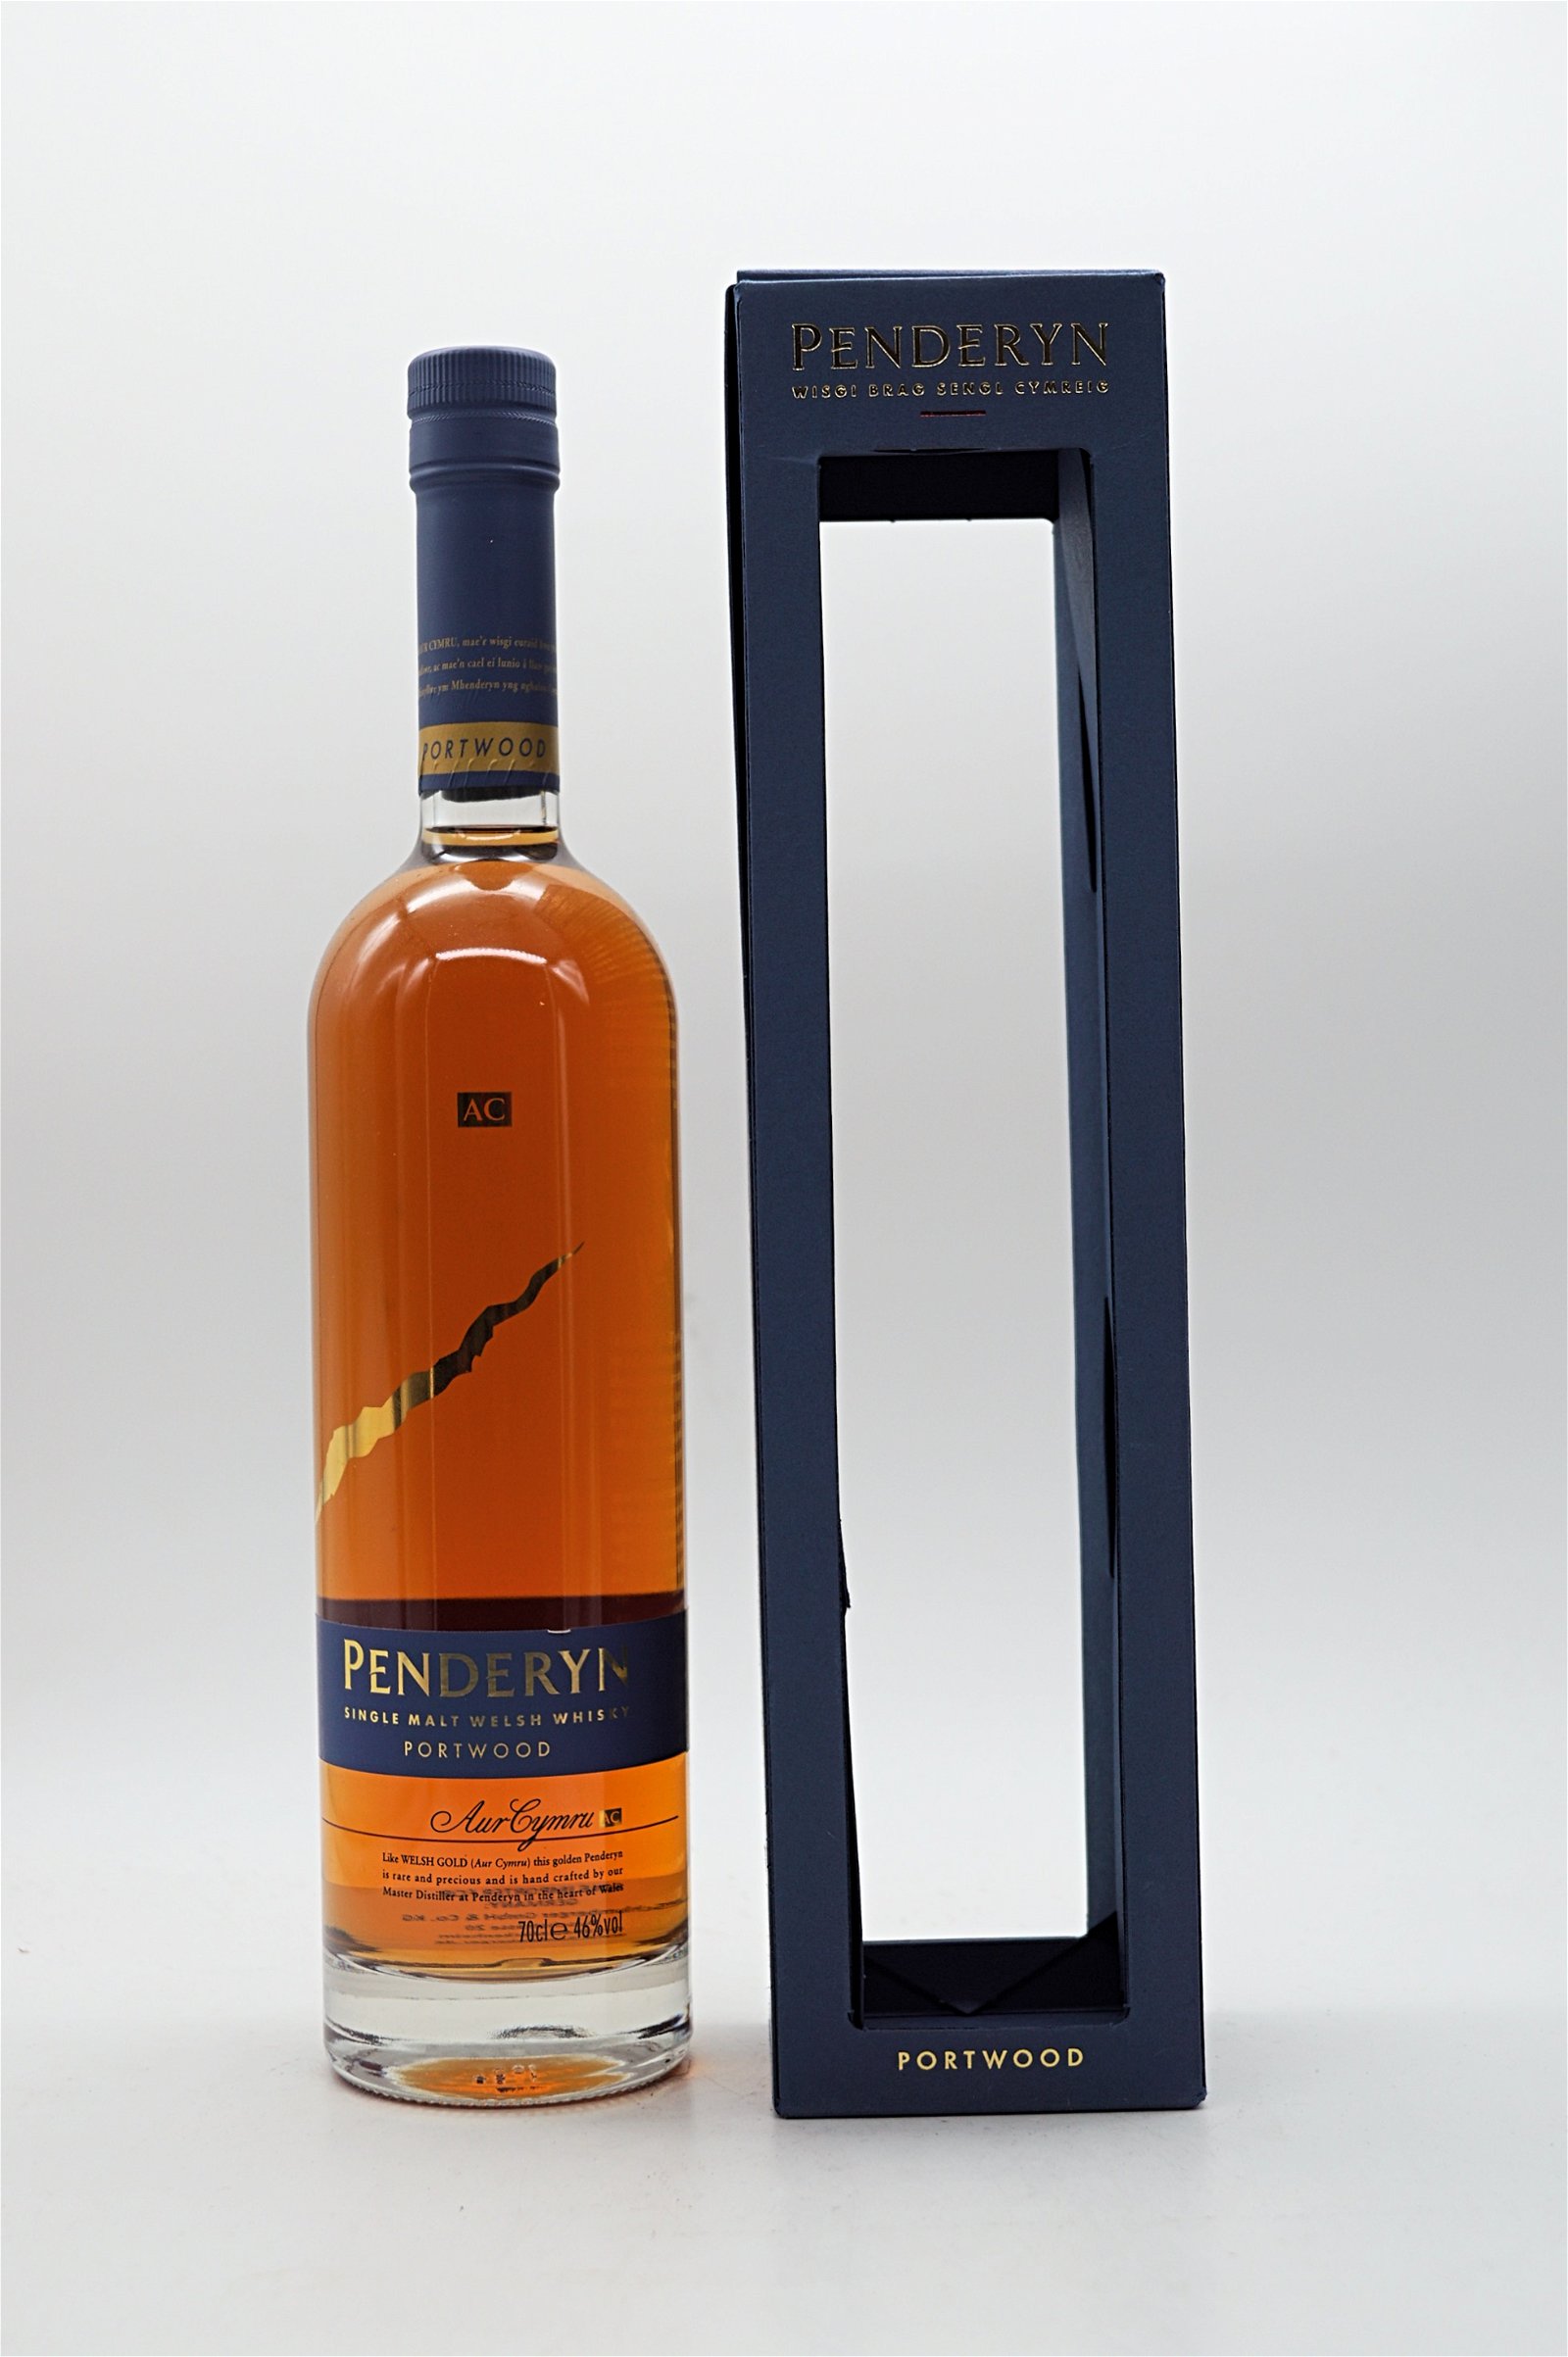 Penderyn Portwood Single Malt Welsh Whisky